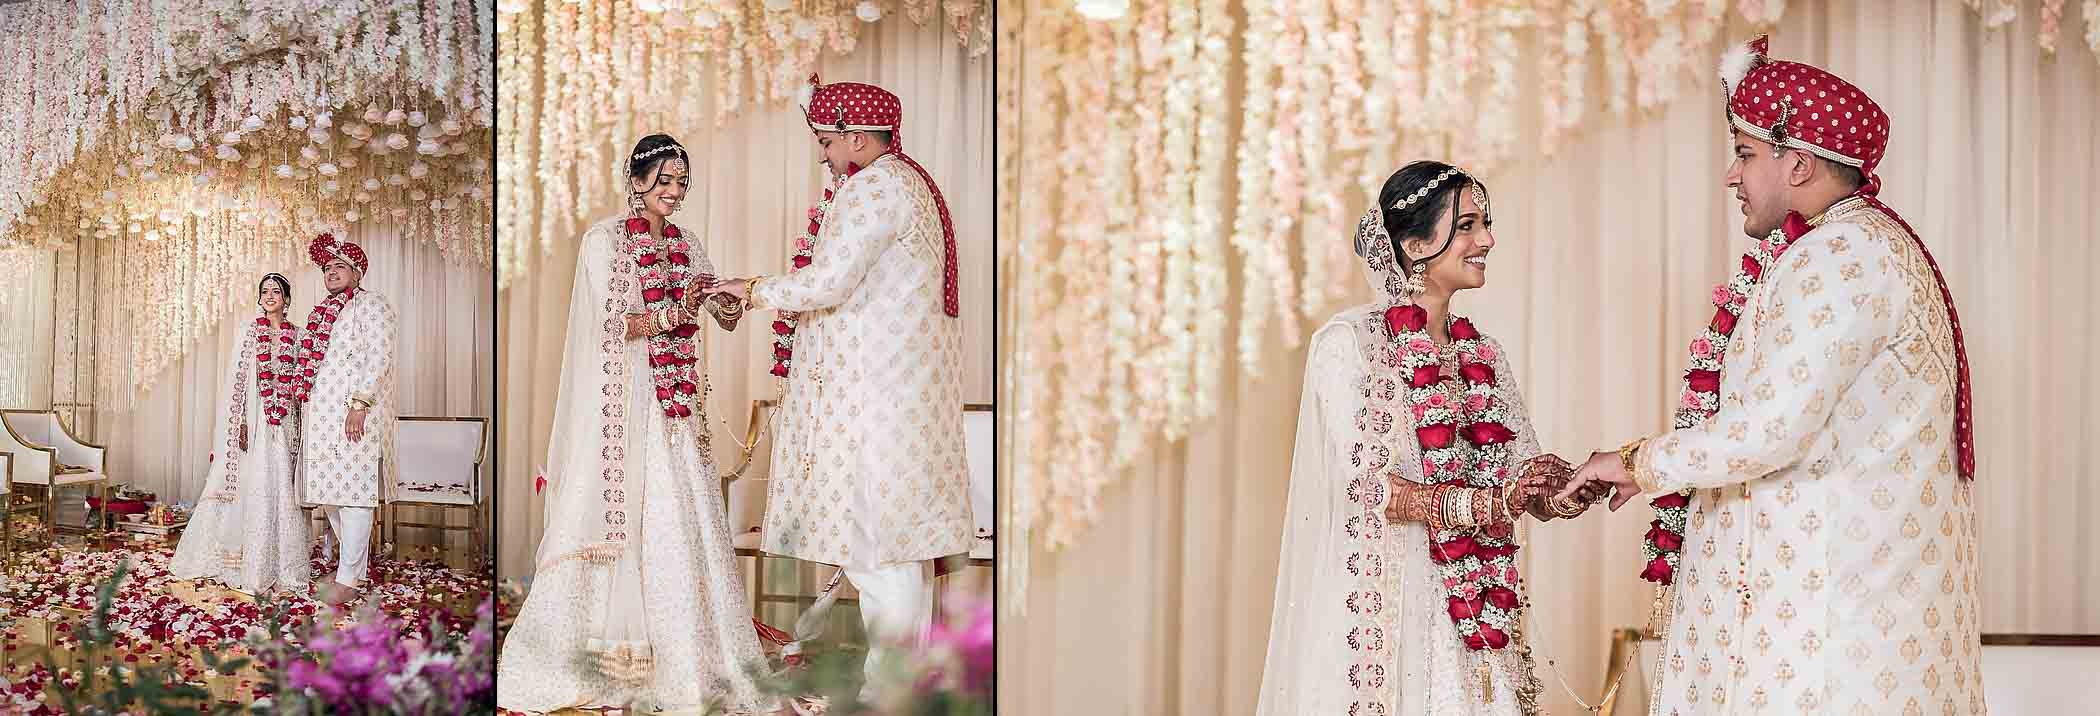 best_atlanta_indian_wedding_photographer_candid-397.jpg